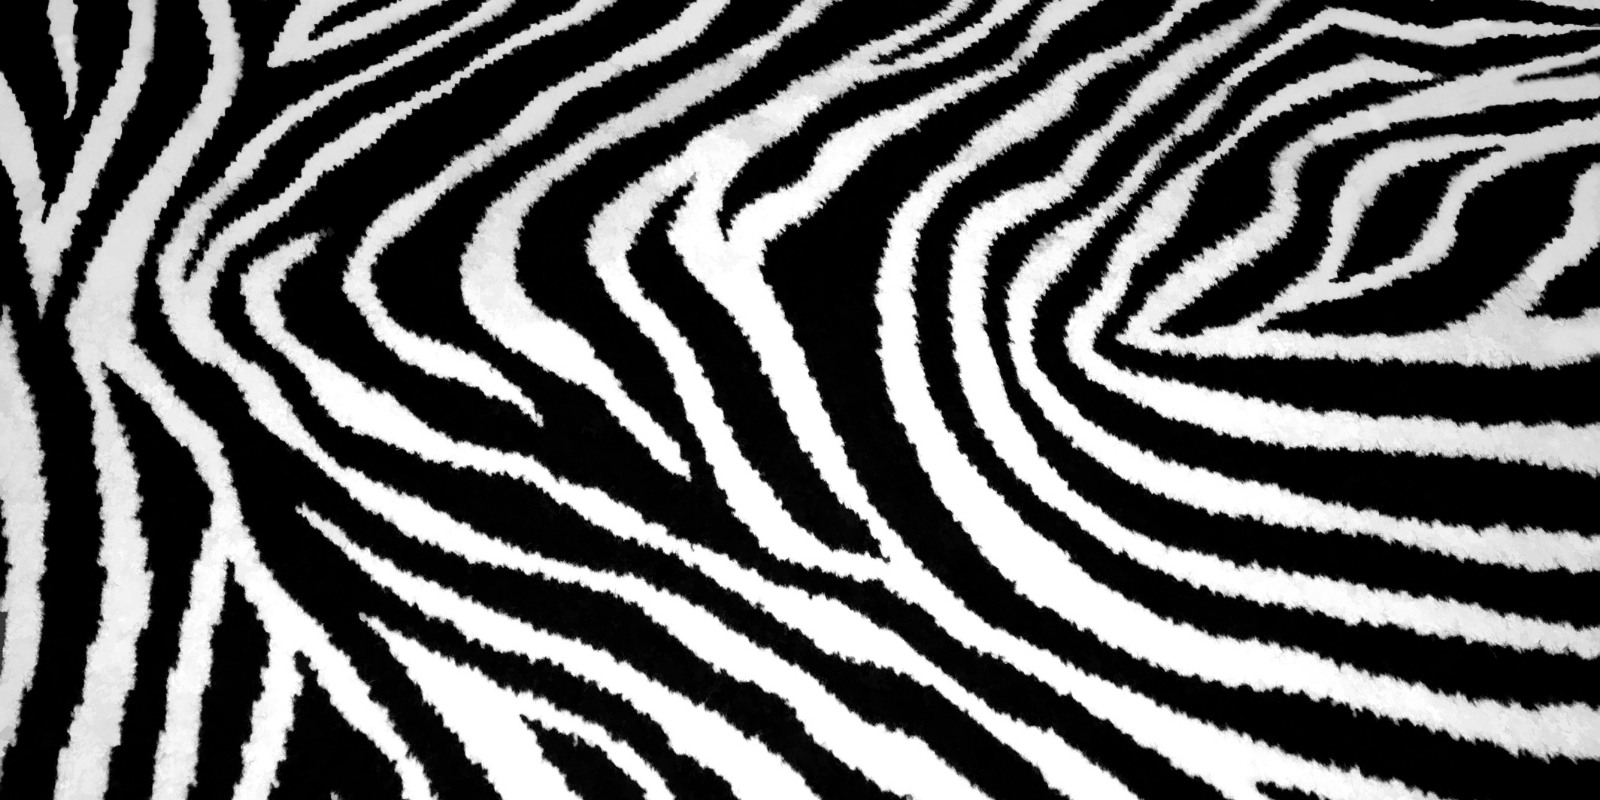 Stile animalier zebrato